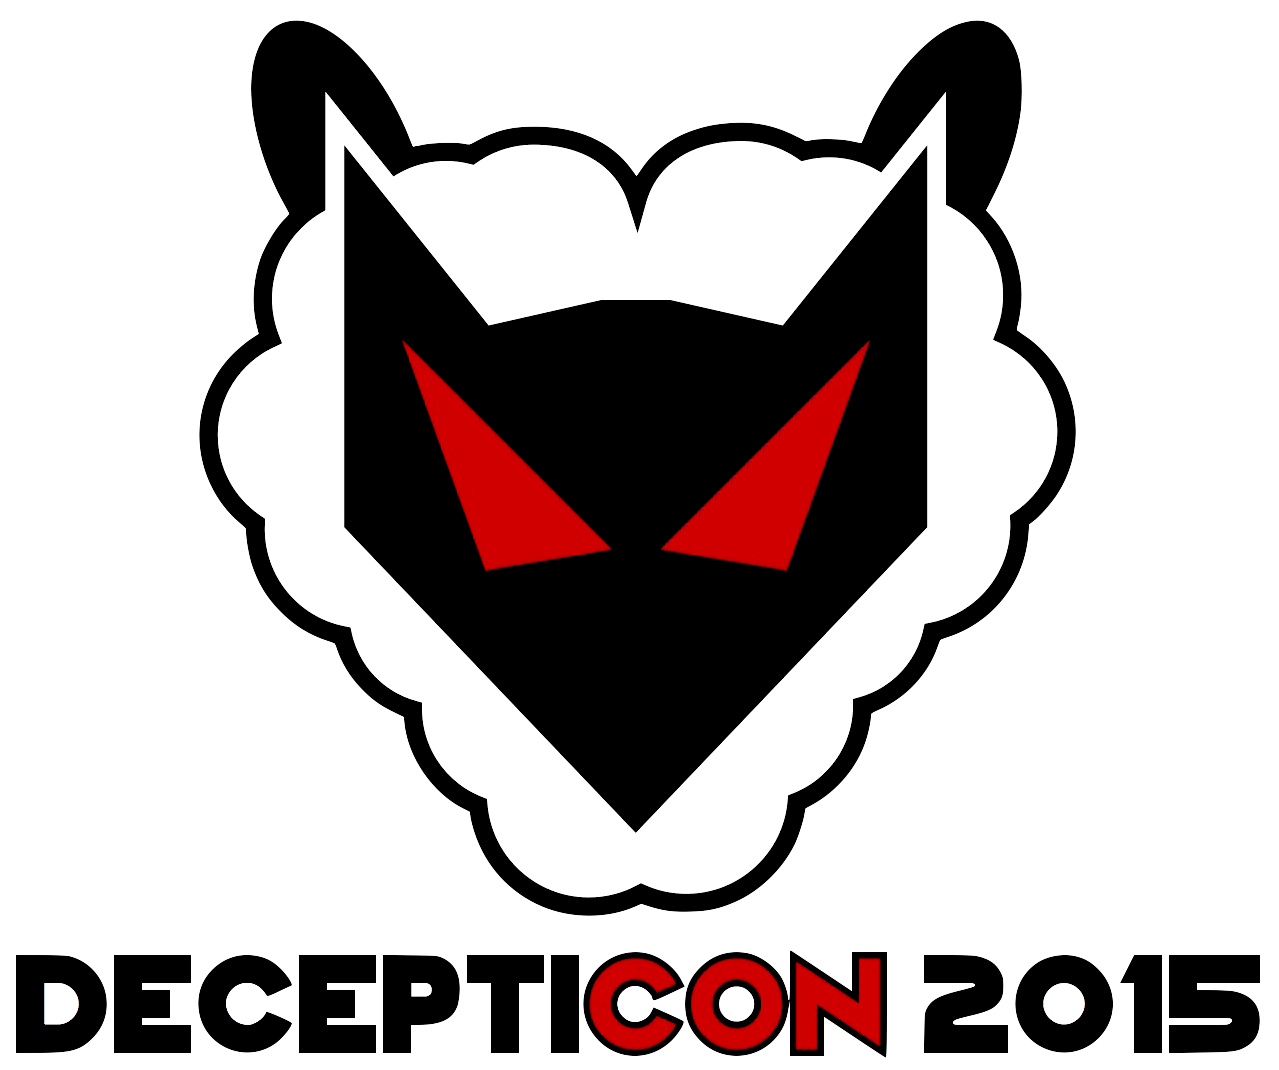 Decepticon 2015's image